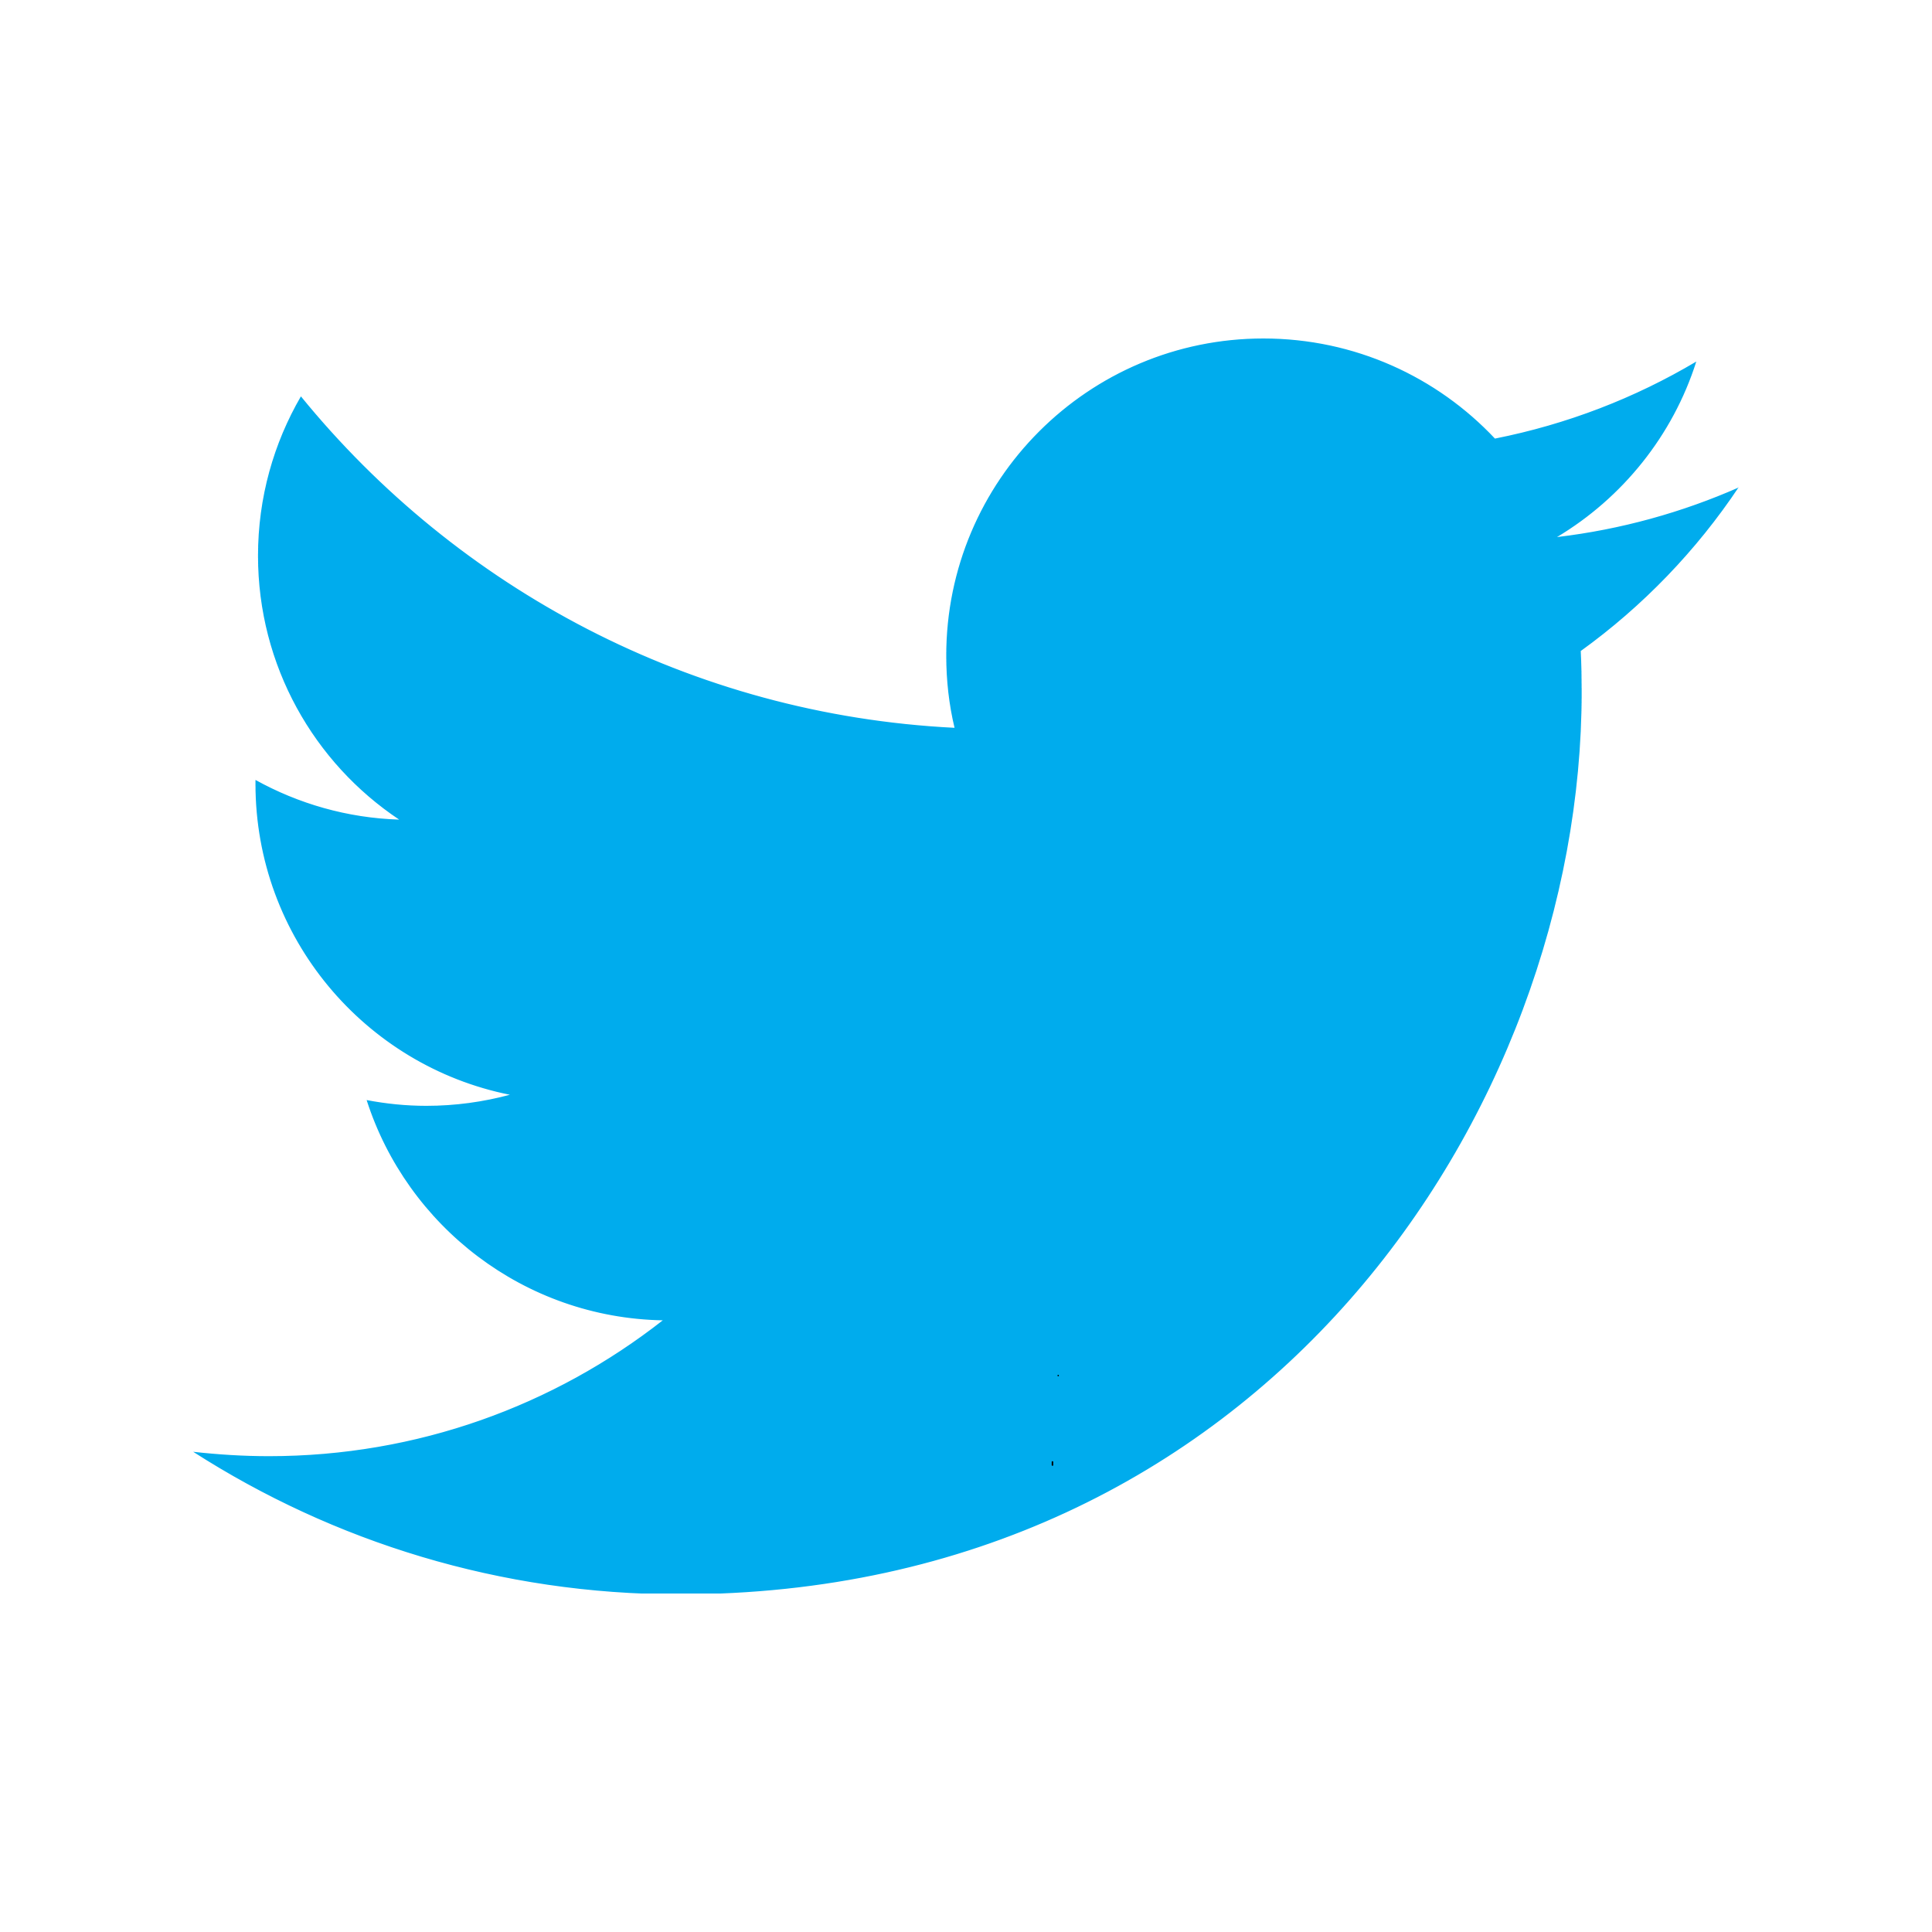 File:Twitter bird logo.png - Wikipedia